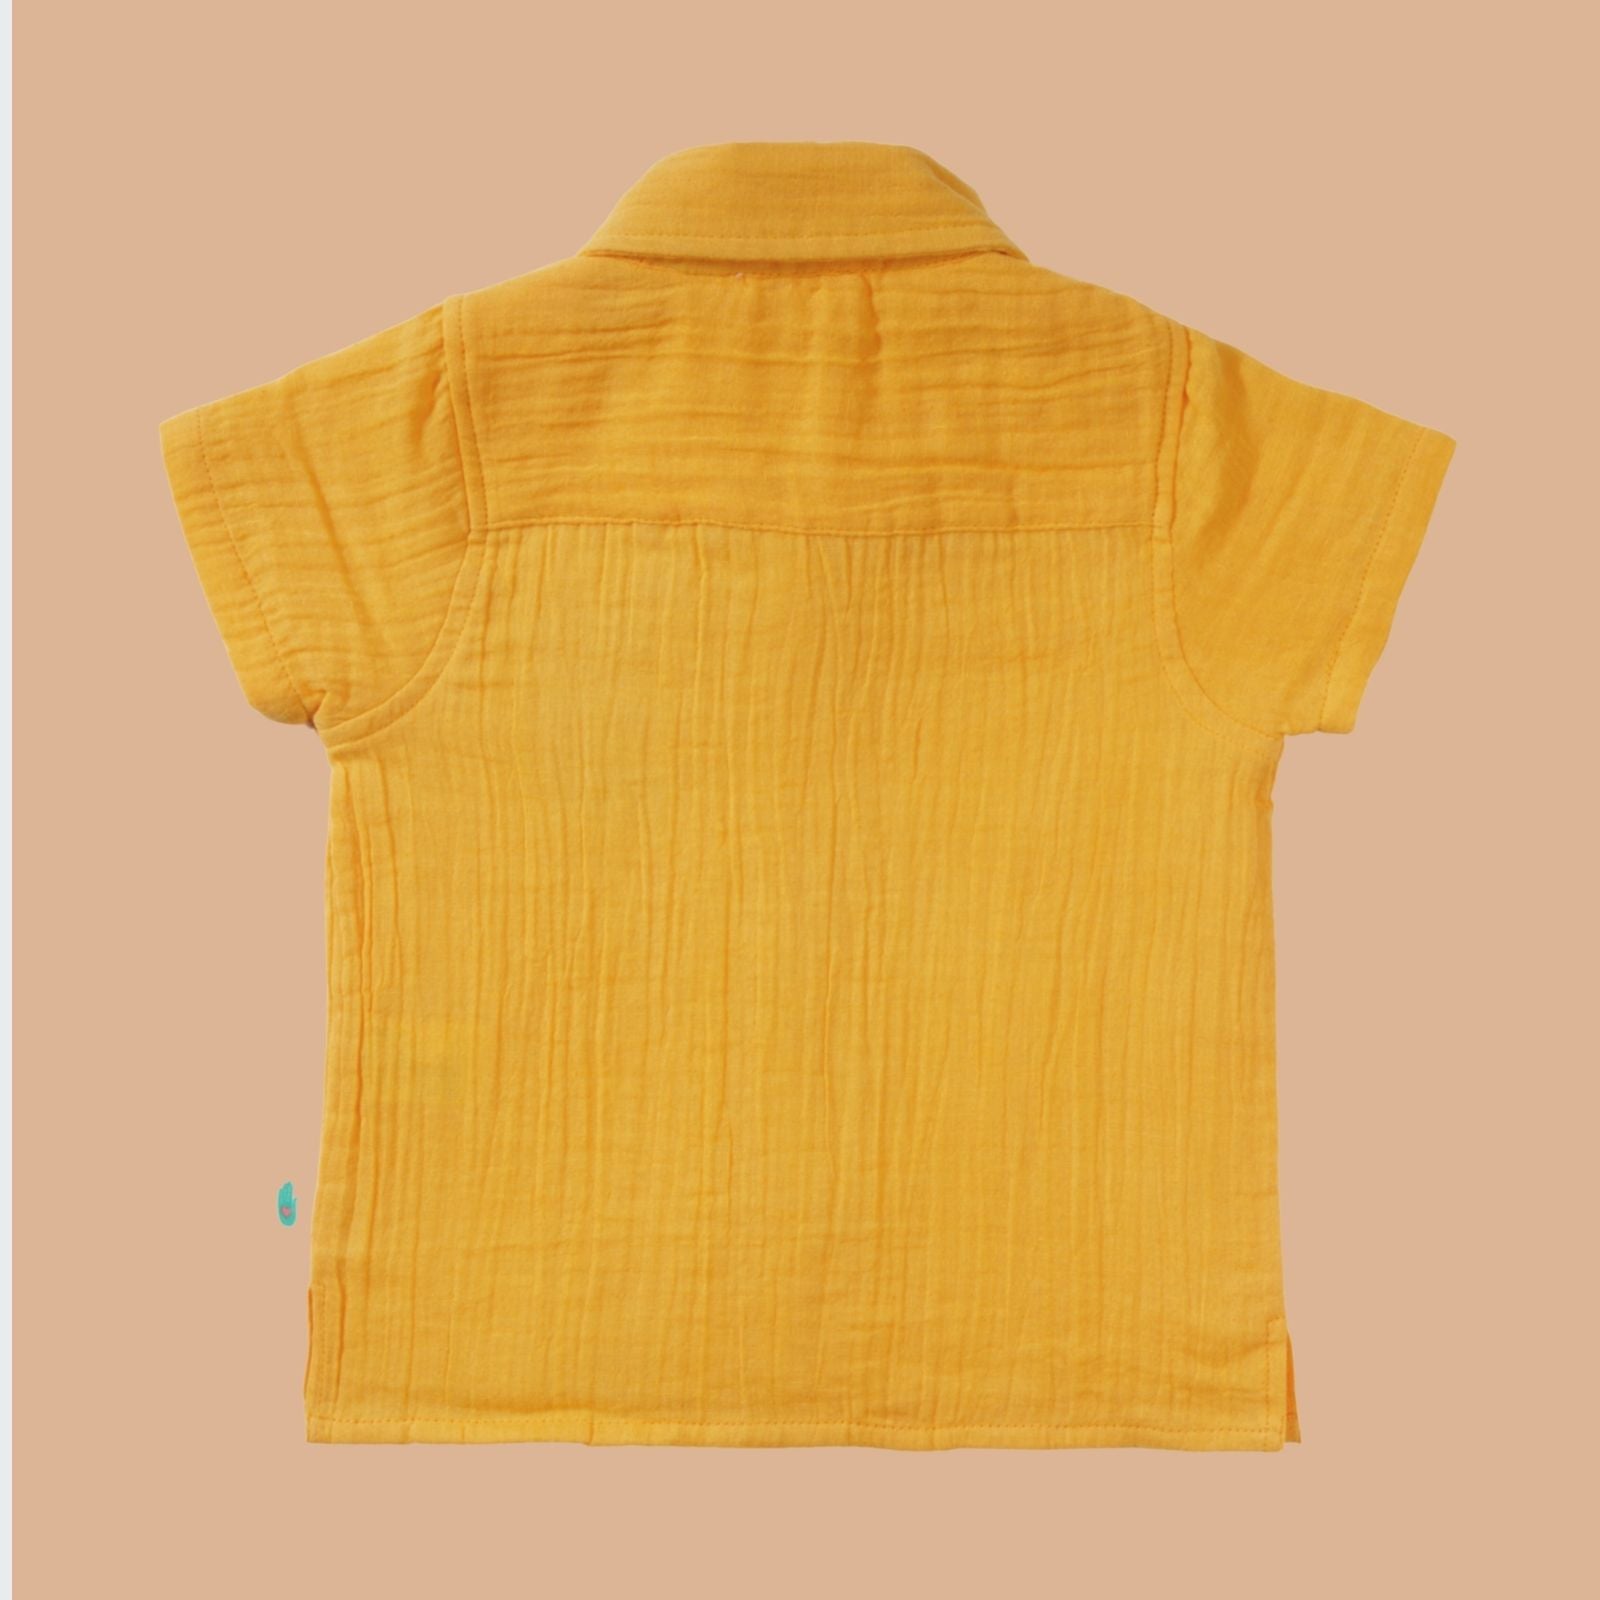 Greendeer Marigold Yellow Shirt with Jungle Print Pants in Cotton